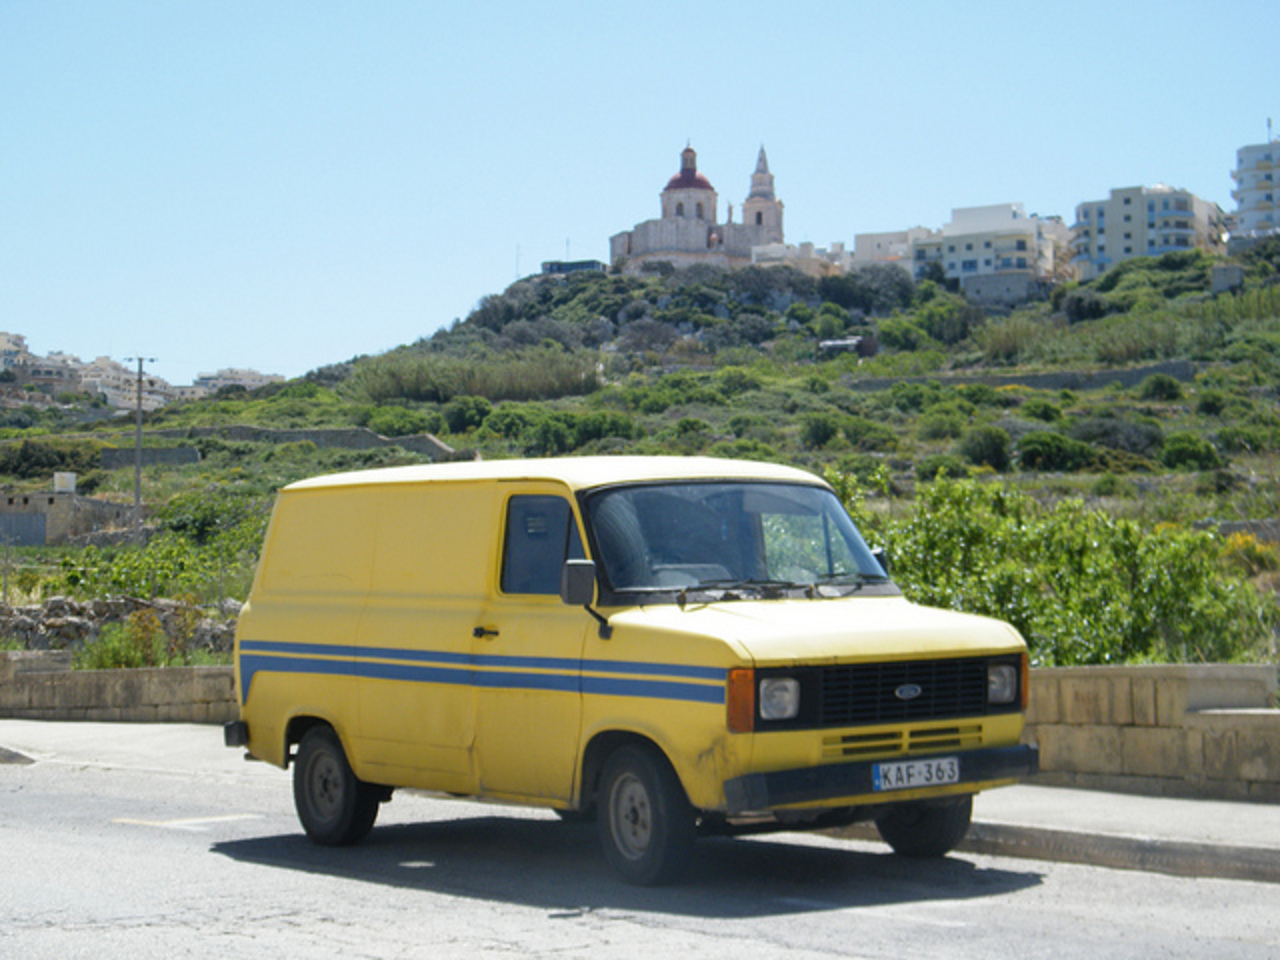 2012 - Malta transport - un set sur Flickr